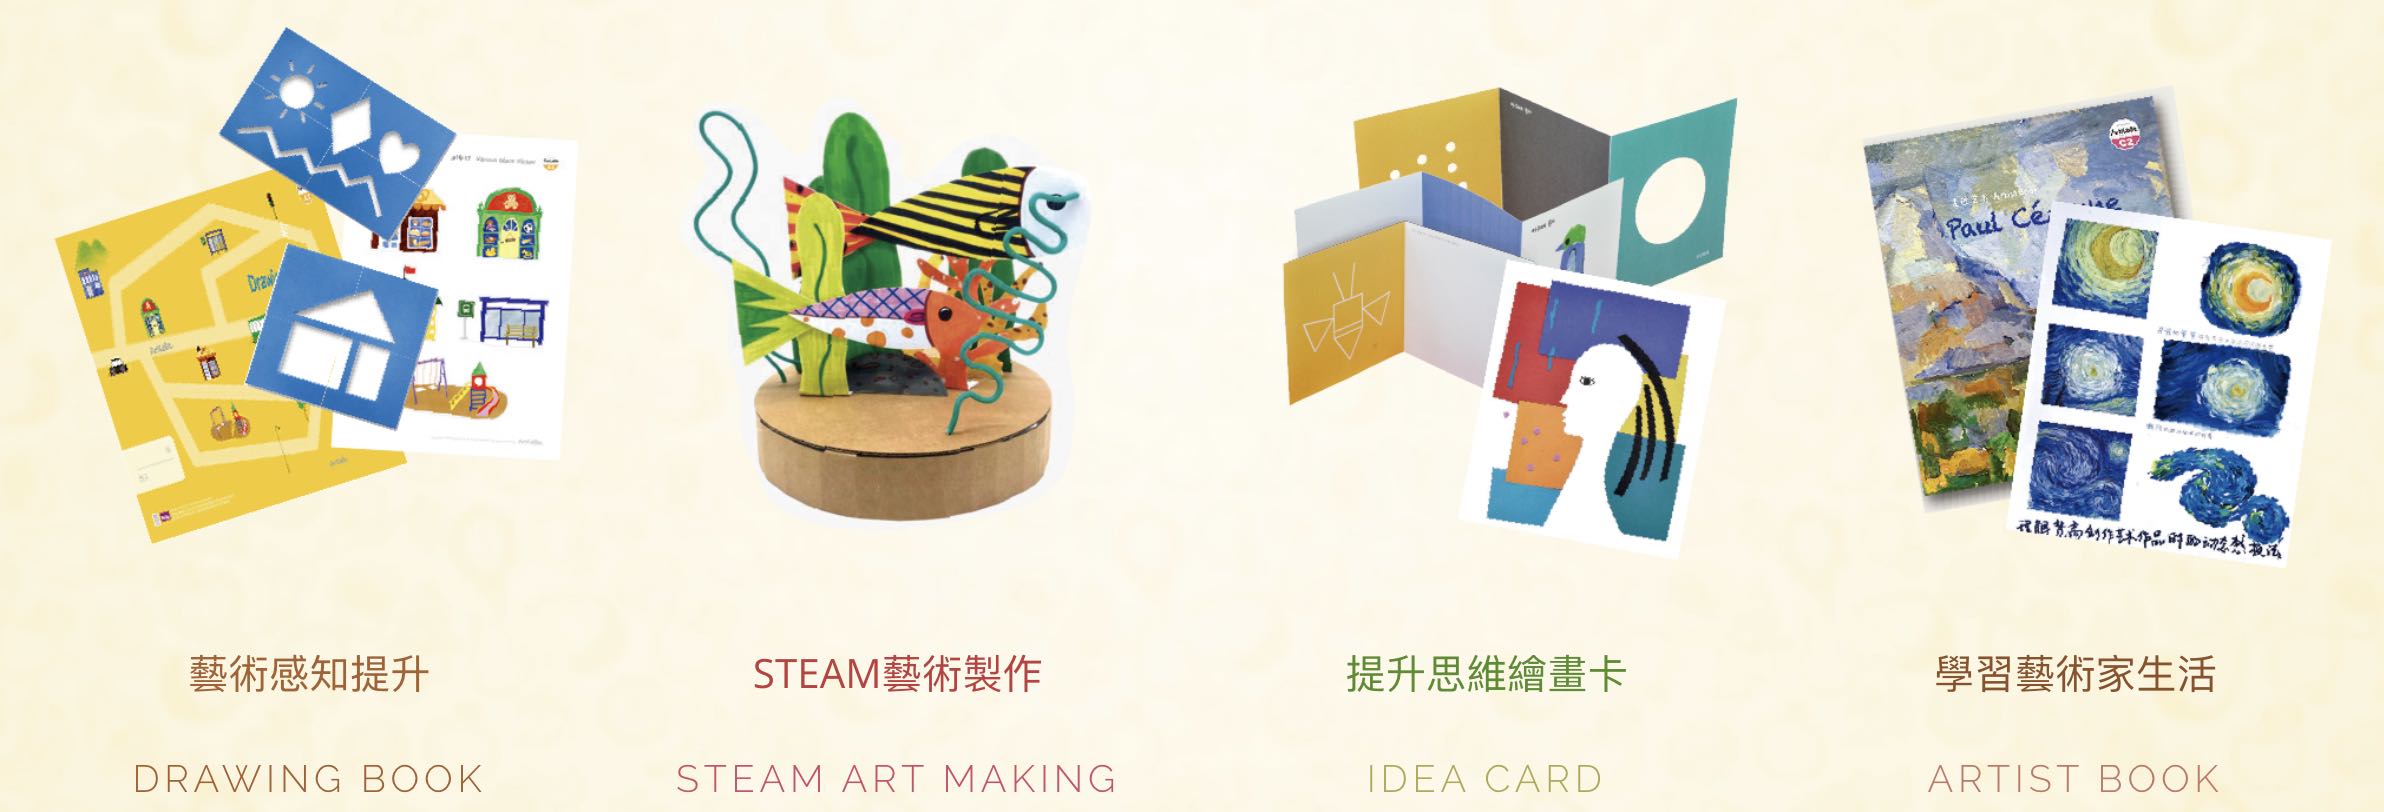 Creart Creative Art center的特許經營香港區加盟店項目5